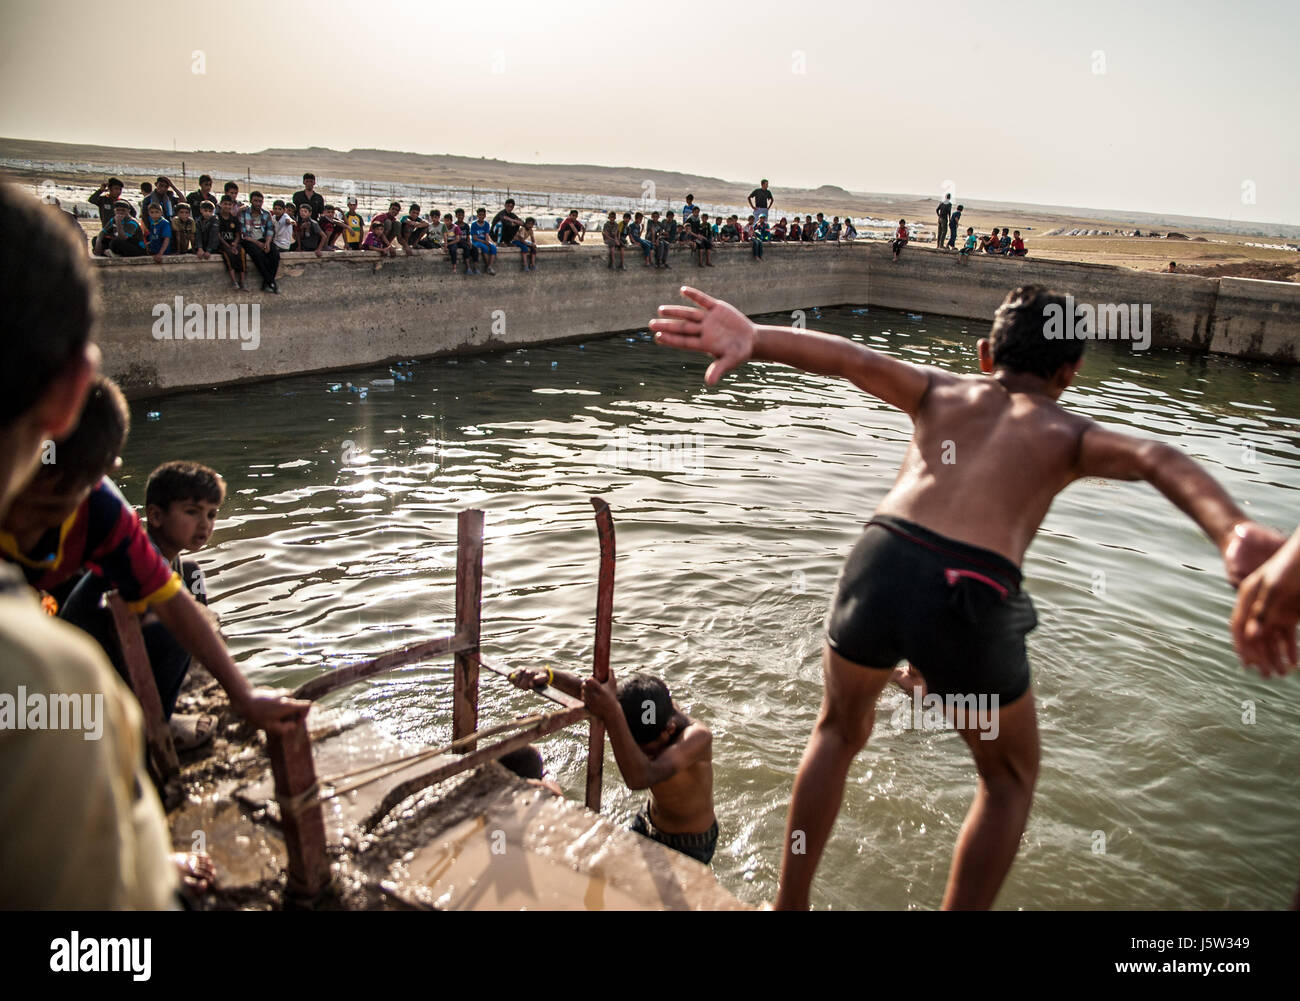 Les enfants nagent dans Hammam Al Alil camp de déplacés, l'Iraq Banque D'Images